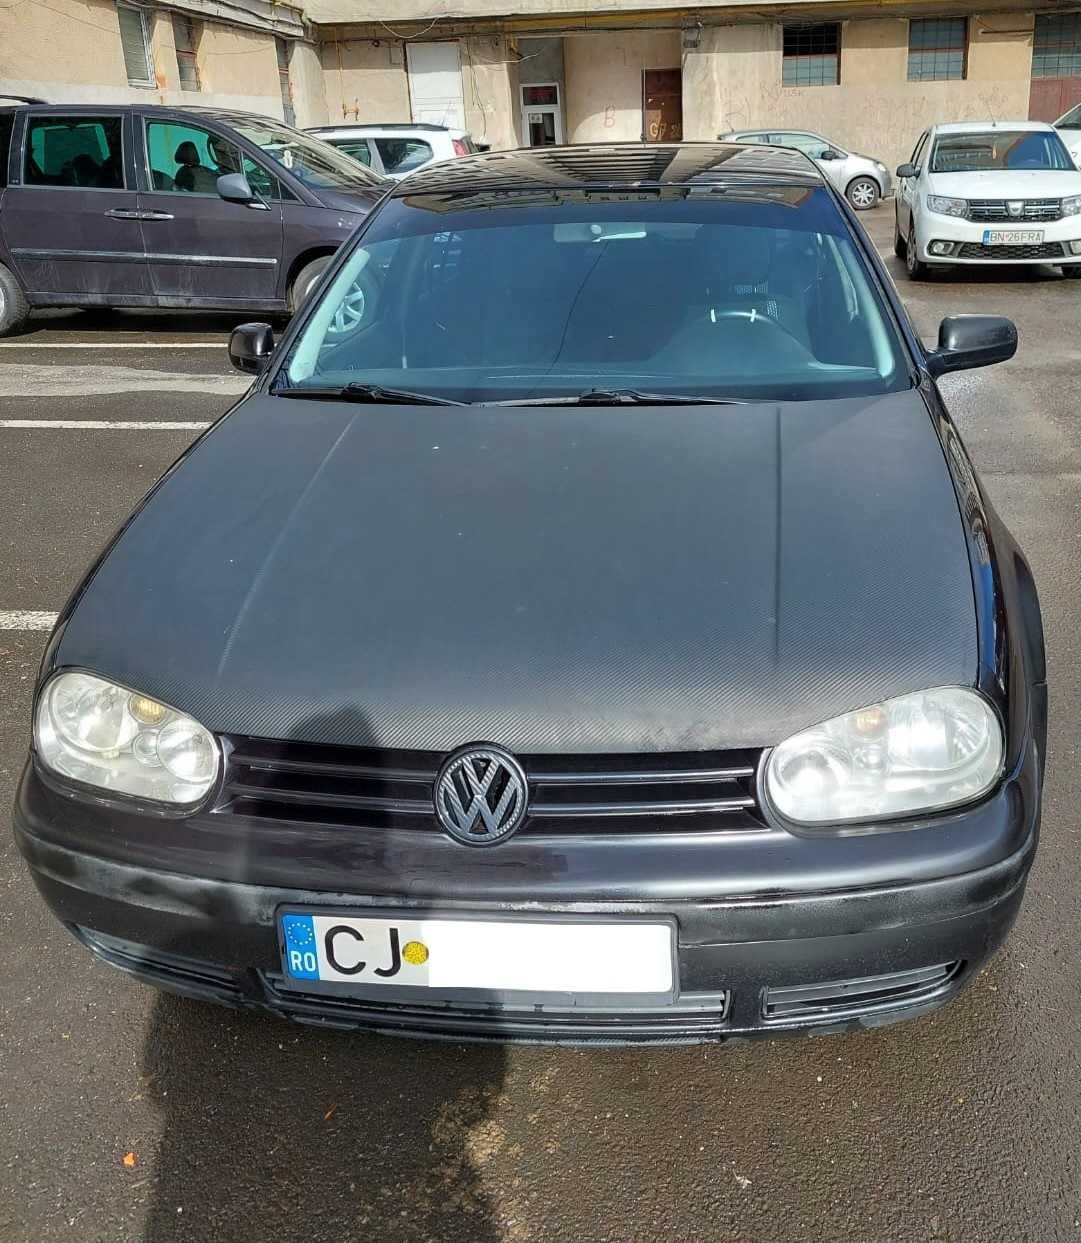 VW Golf IV 2002, 1600 cmc, 16v, 105 CP